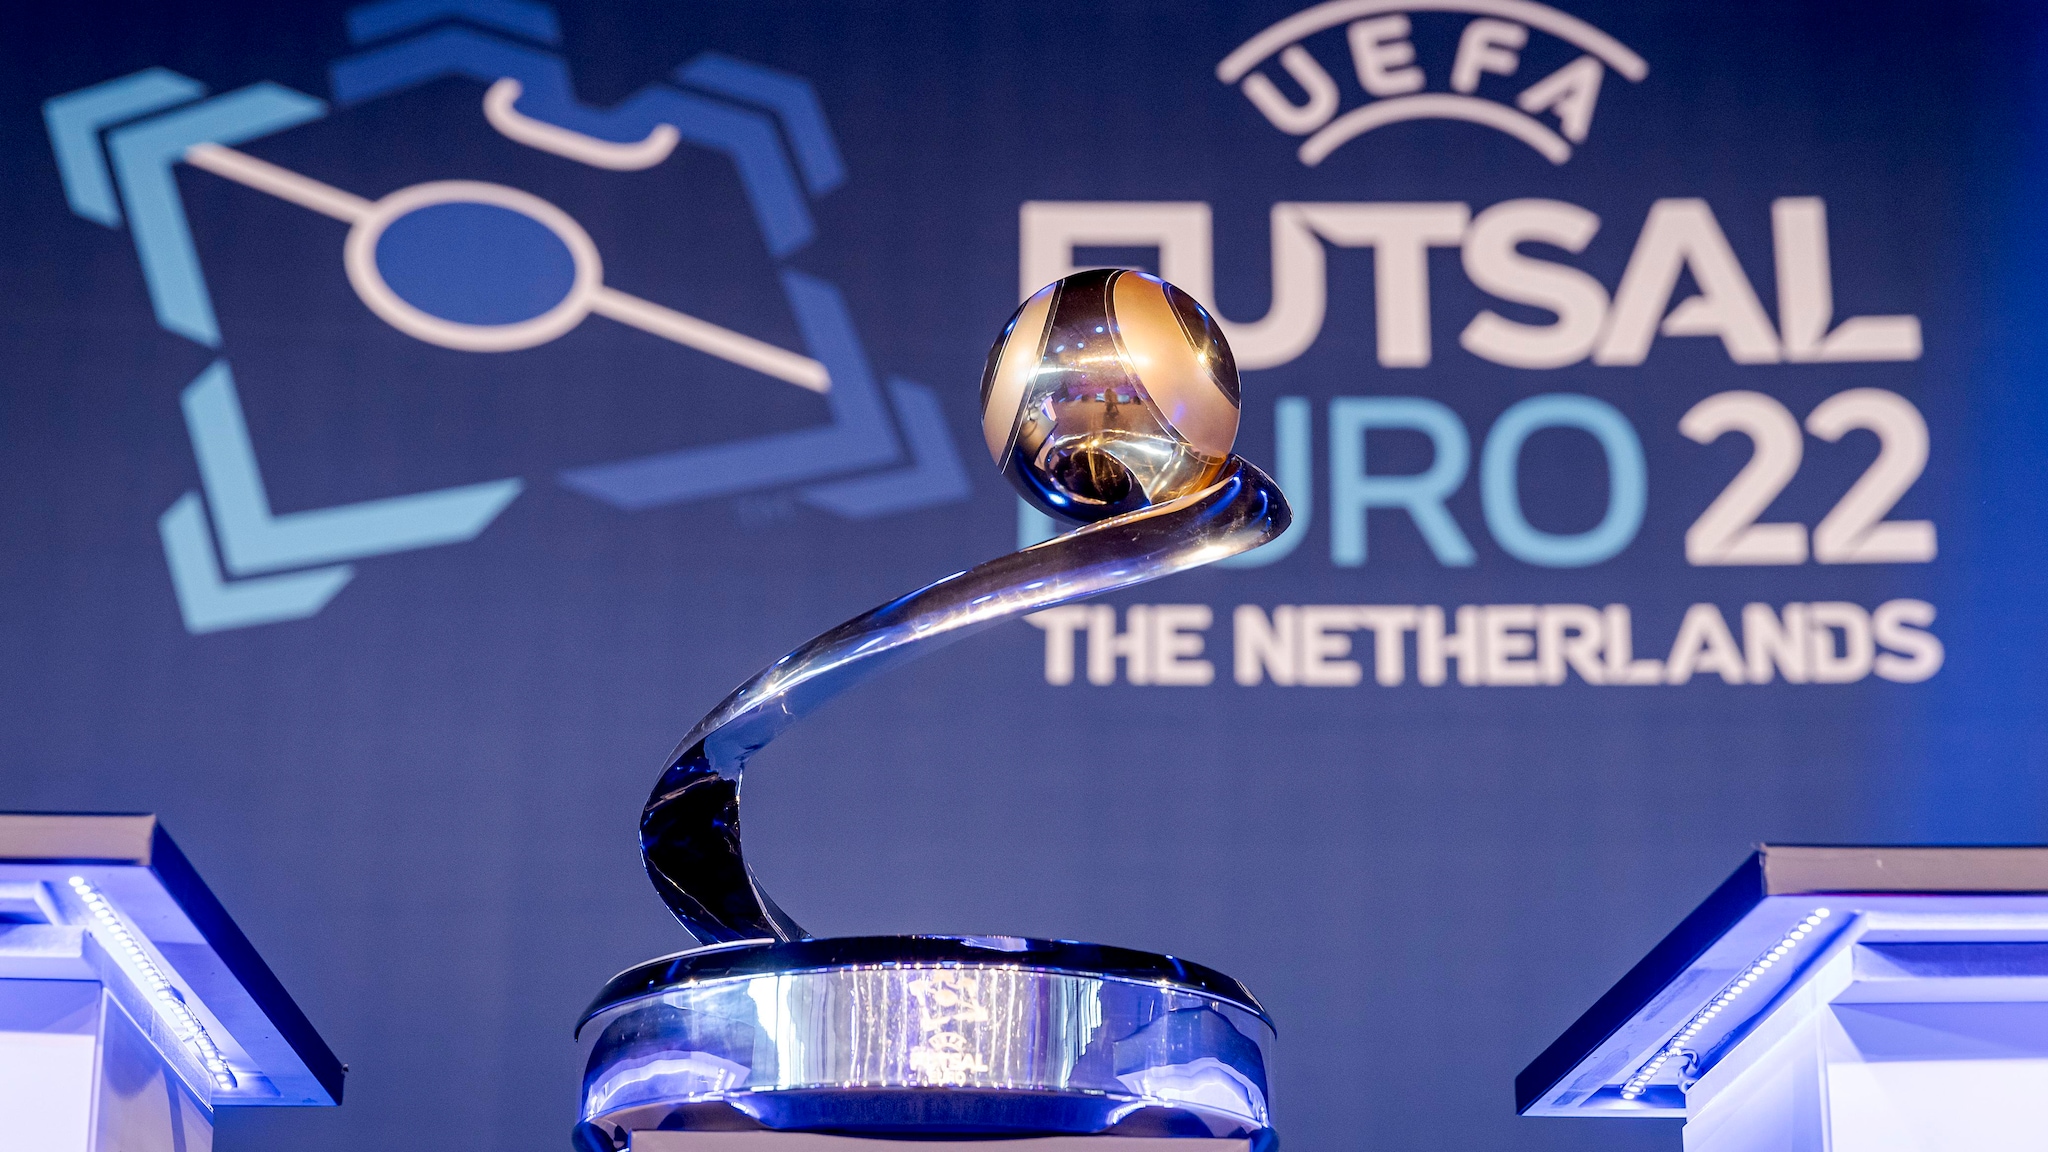 Rozpis UEFA Futsal Cup 2022 |  EURO futsal